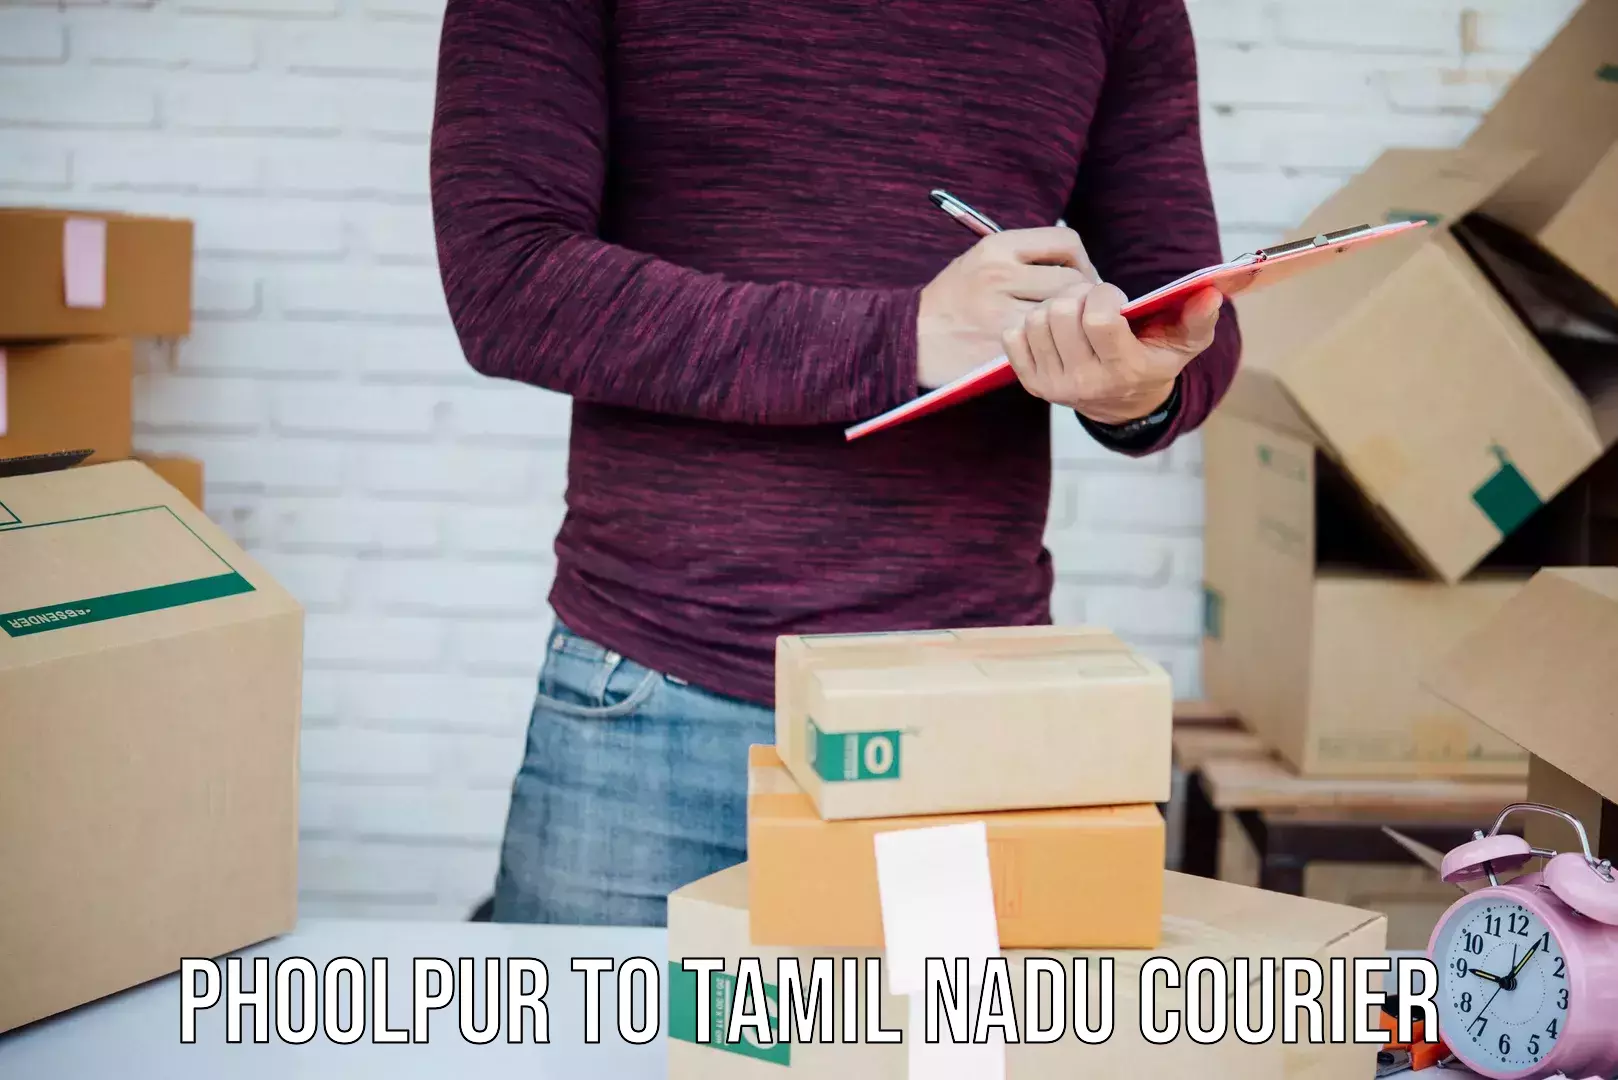 Courier service innovation Phoolpur to Tamil Nadu